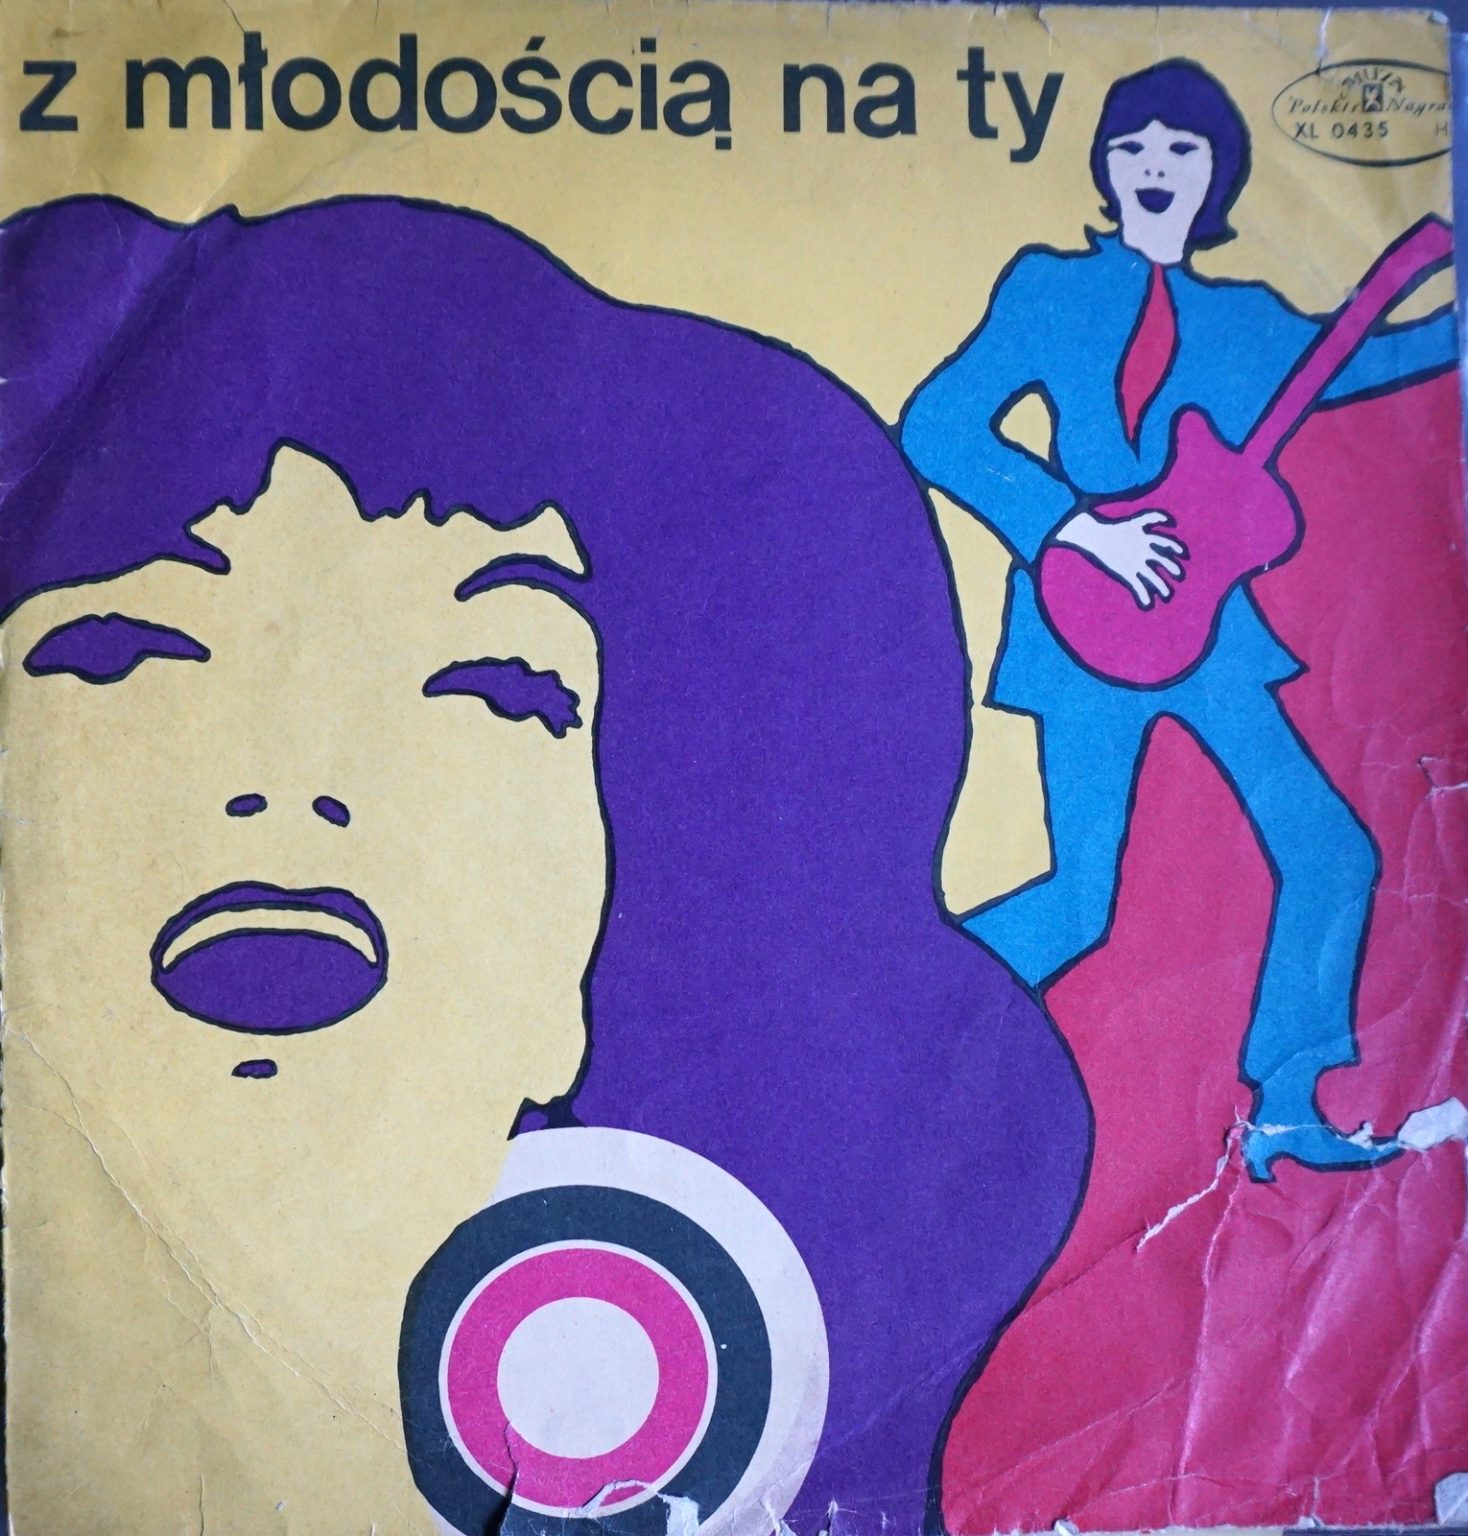 Various – Z młodością na ty [Vinyl LP] (g/g)